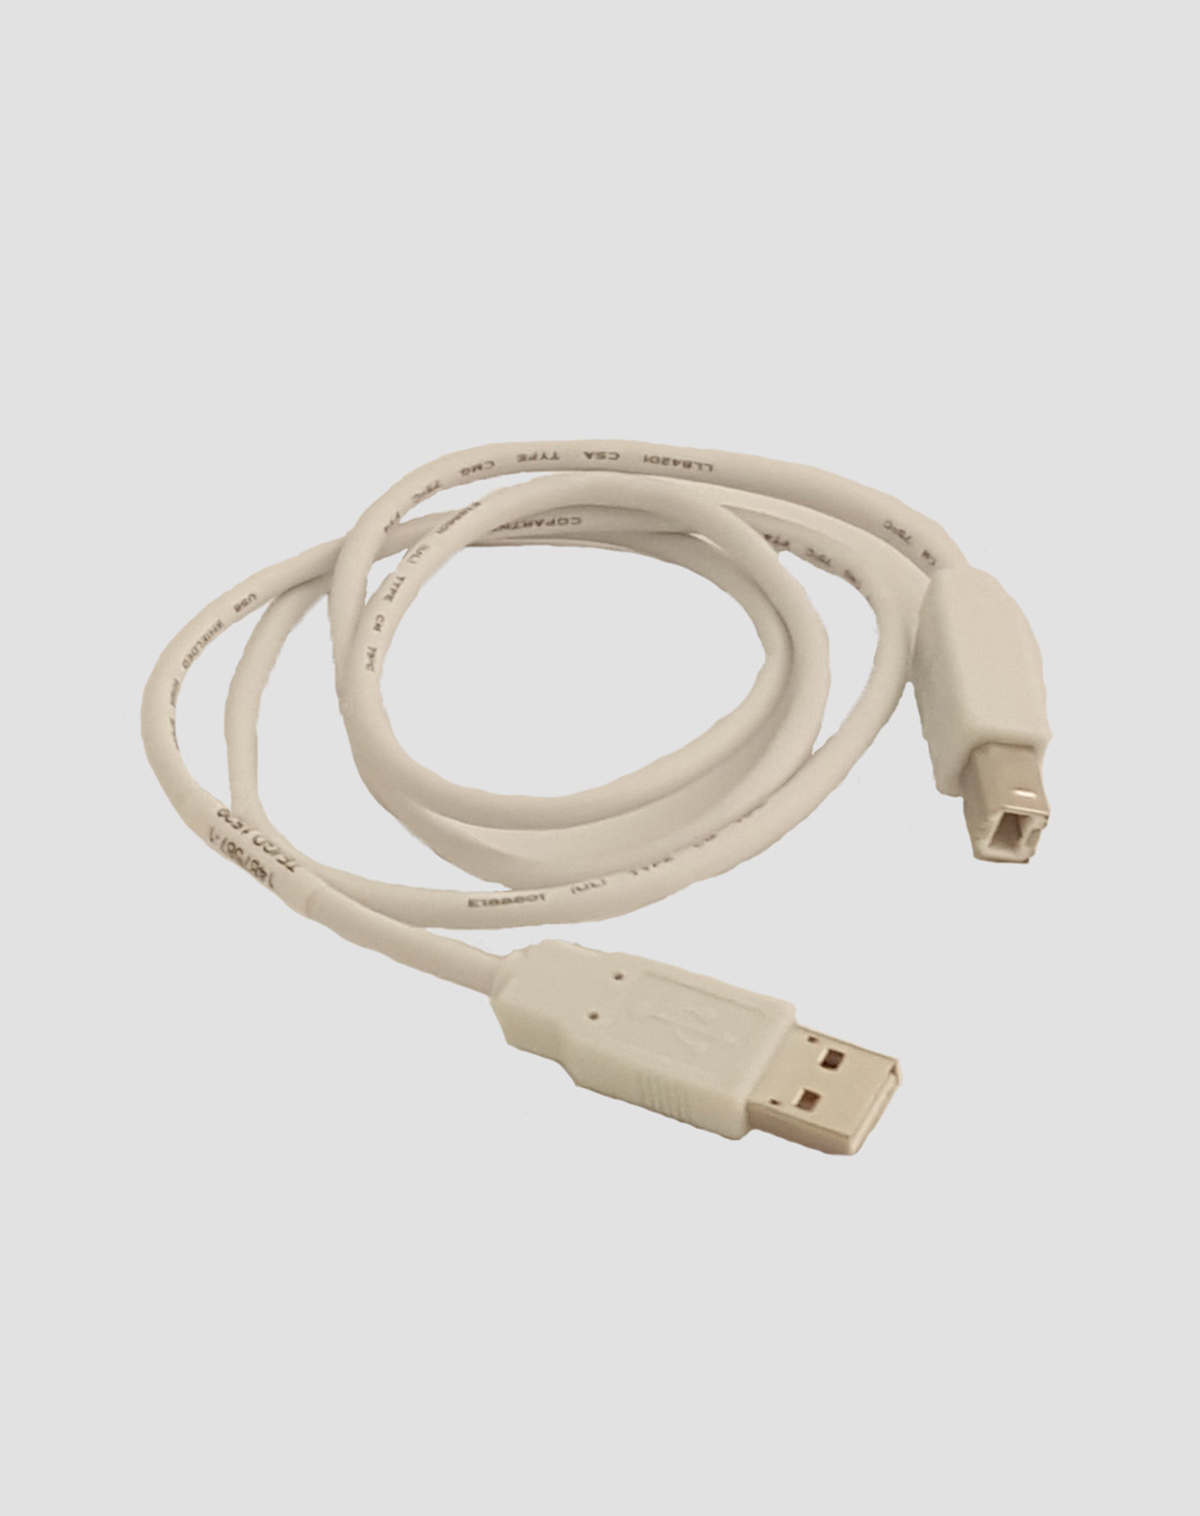 ATP 33 EV™ USB-Cable